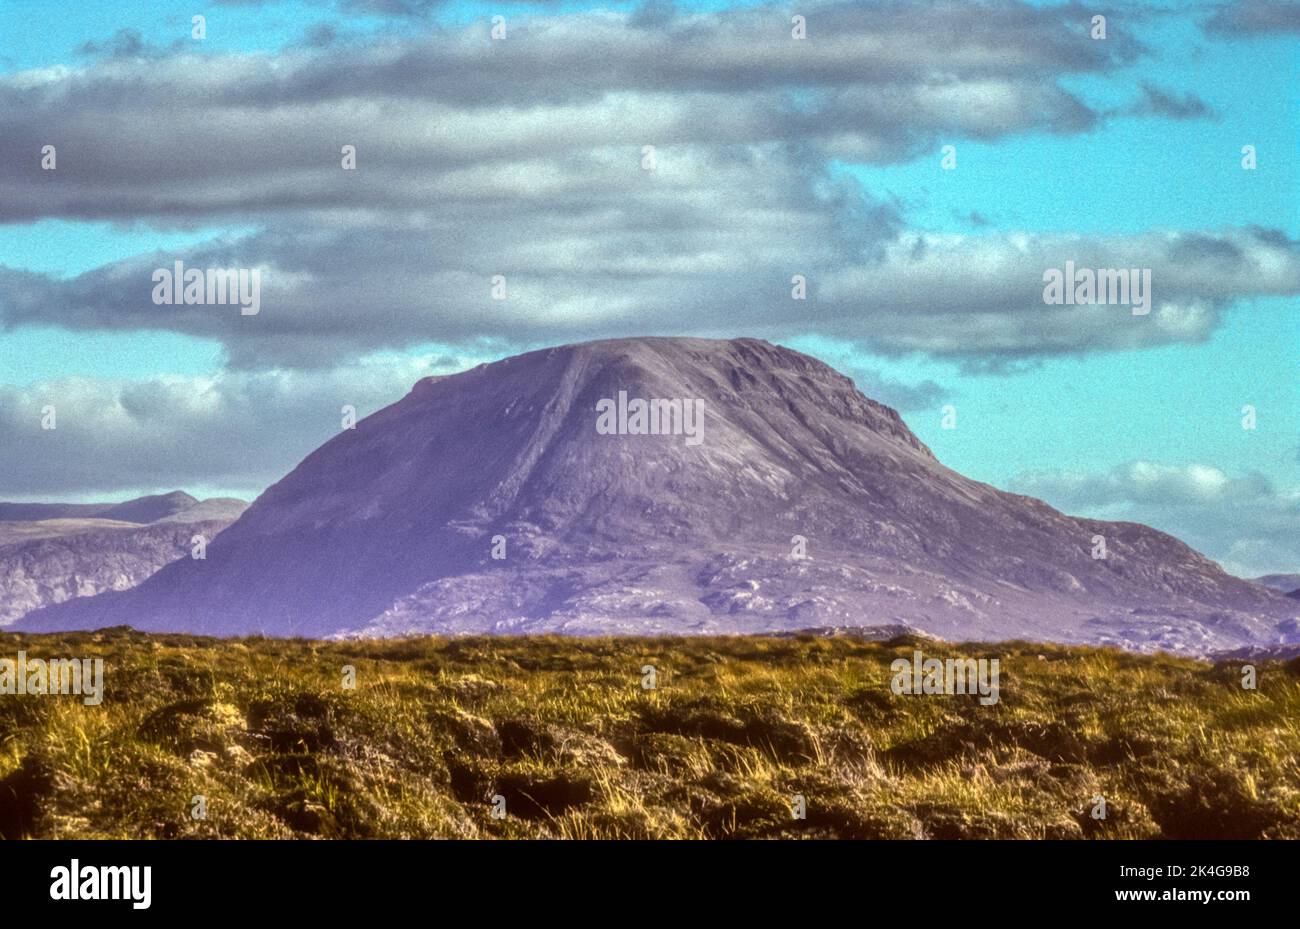 The Scottish mountain Arkle in Sutherland seen from near Sandwood Bay. Stock Photo